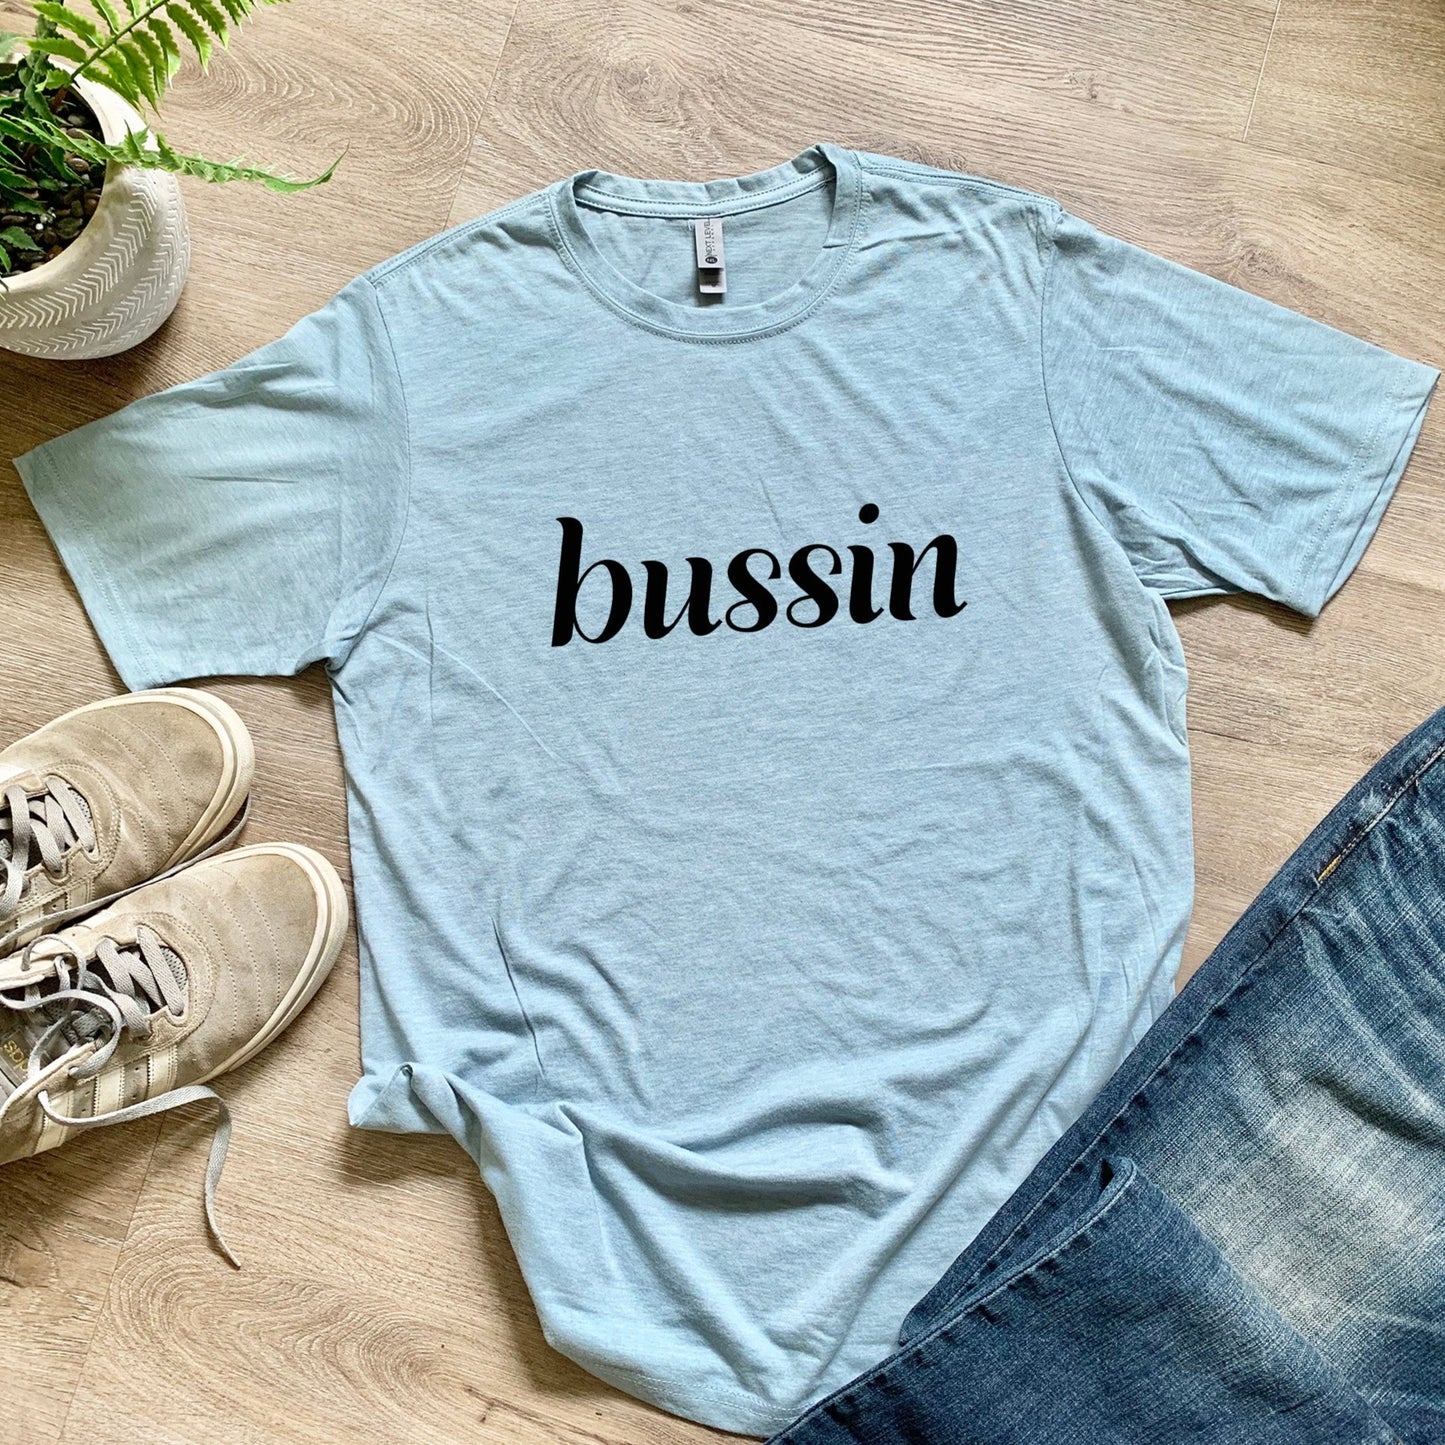 Bussin - Men's / Unisex Tee - Stonewash Blue or Sage